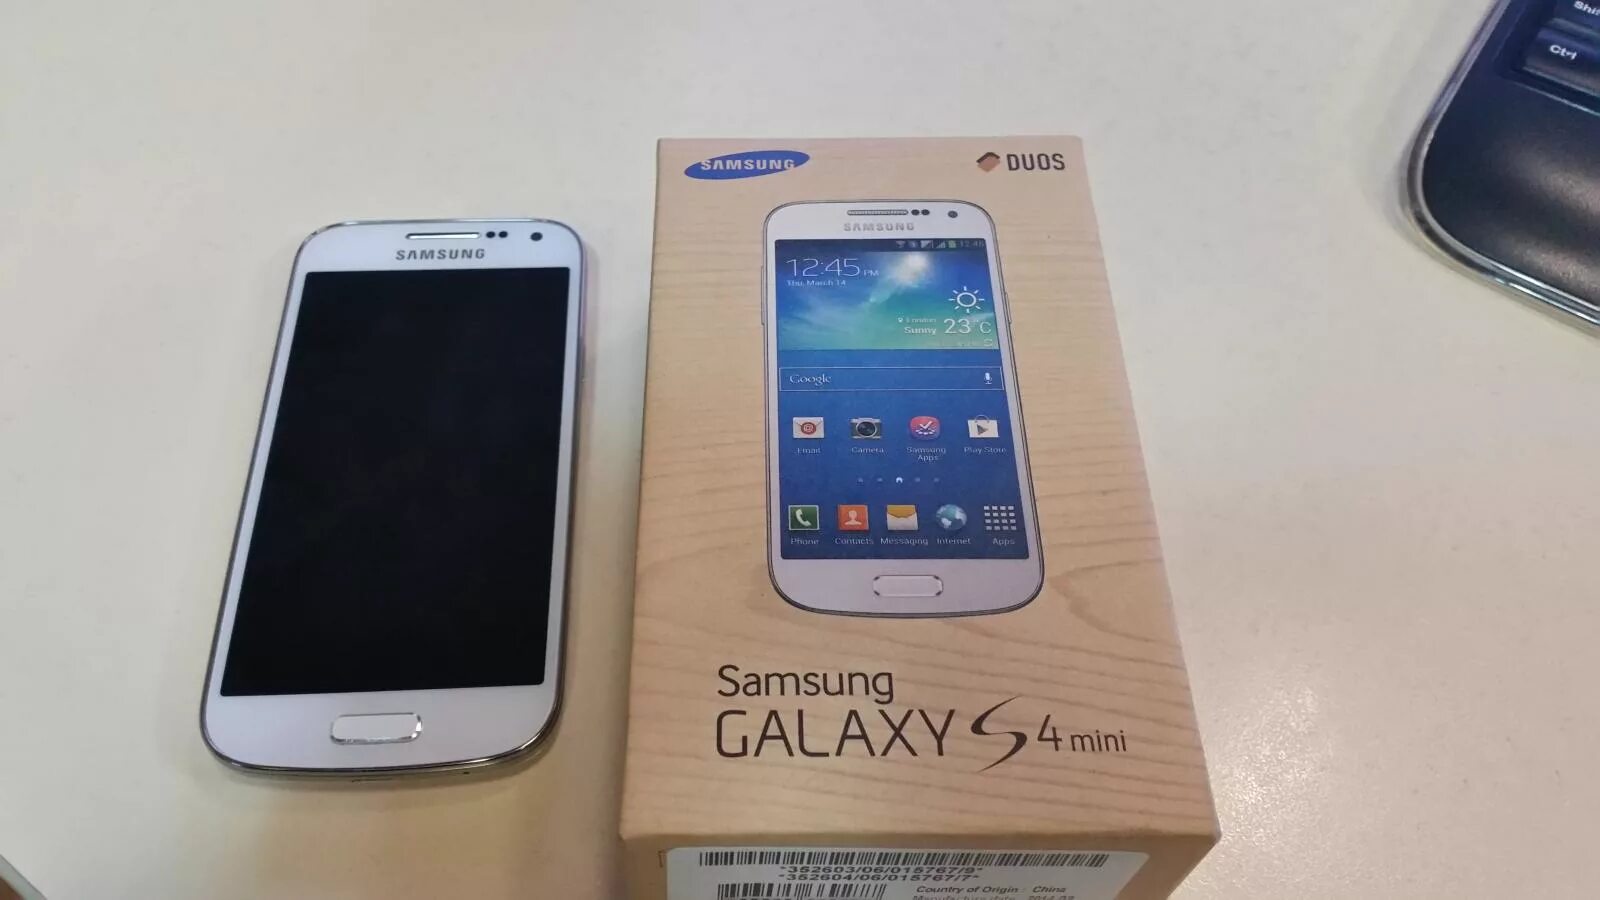 Samsung s4 Mini Duos. Samsung Galaxy s4 Mini Duos. Samsung s4 i9192i. Самсунг Гэлакси с 4 мини i9192i. S4 mini купить